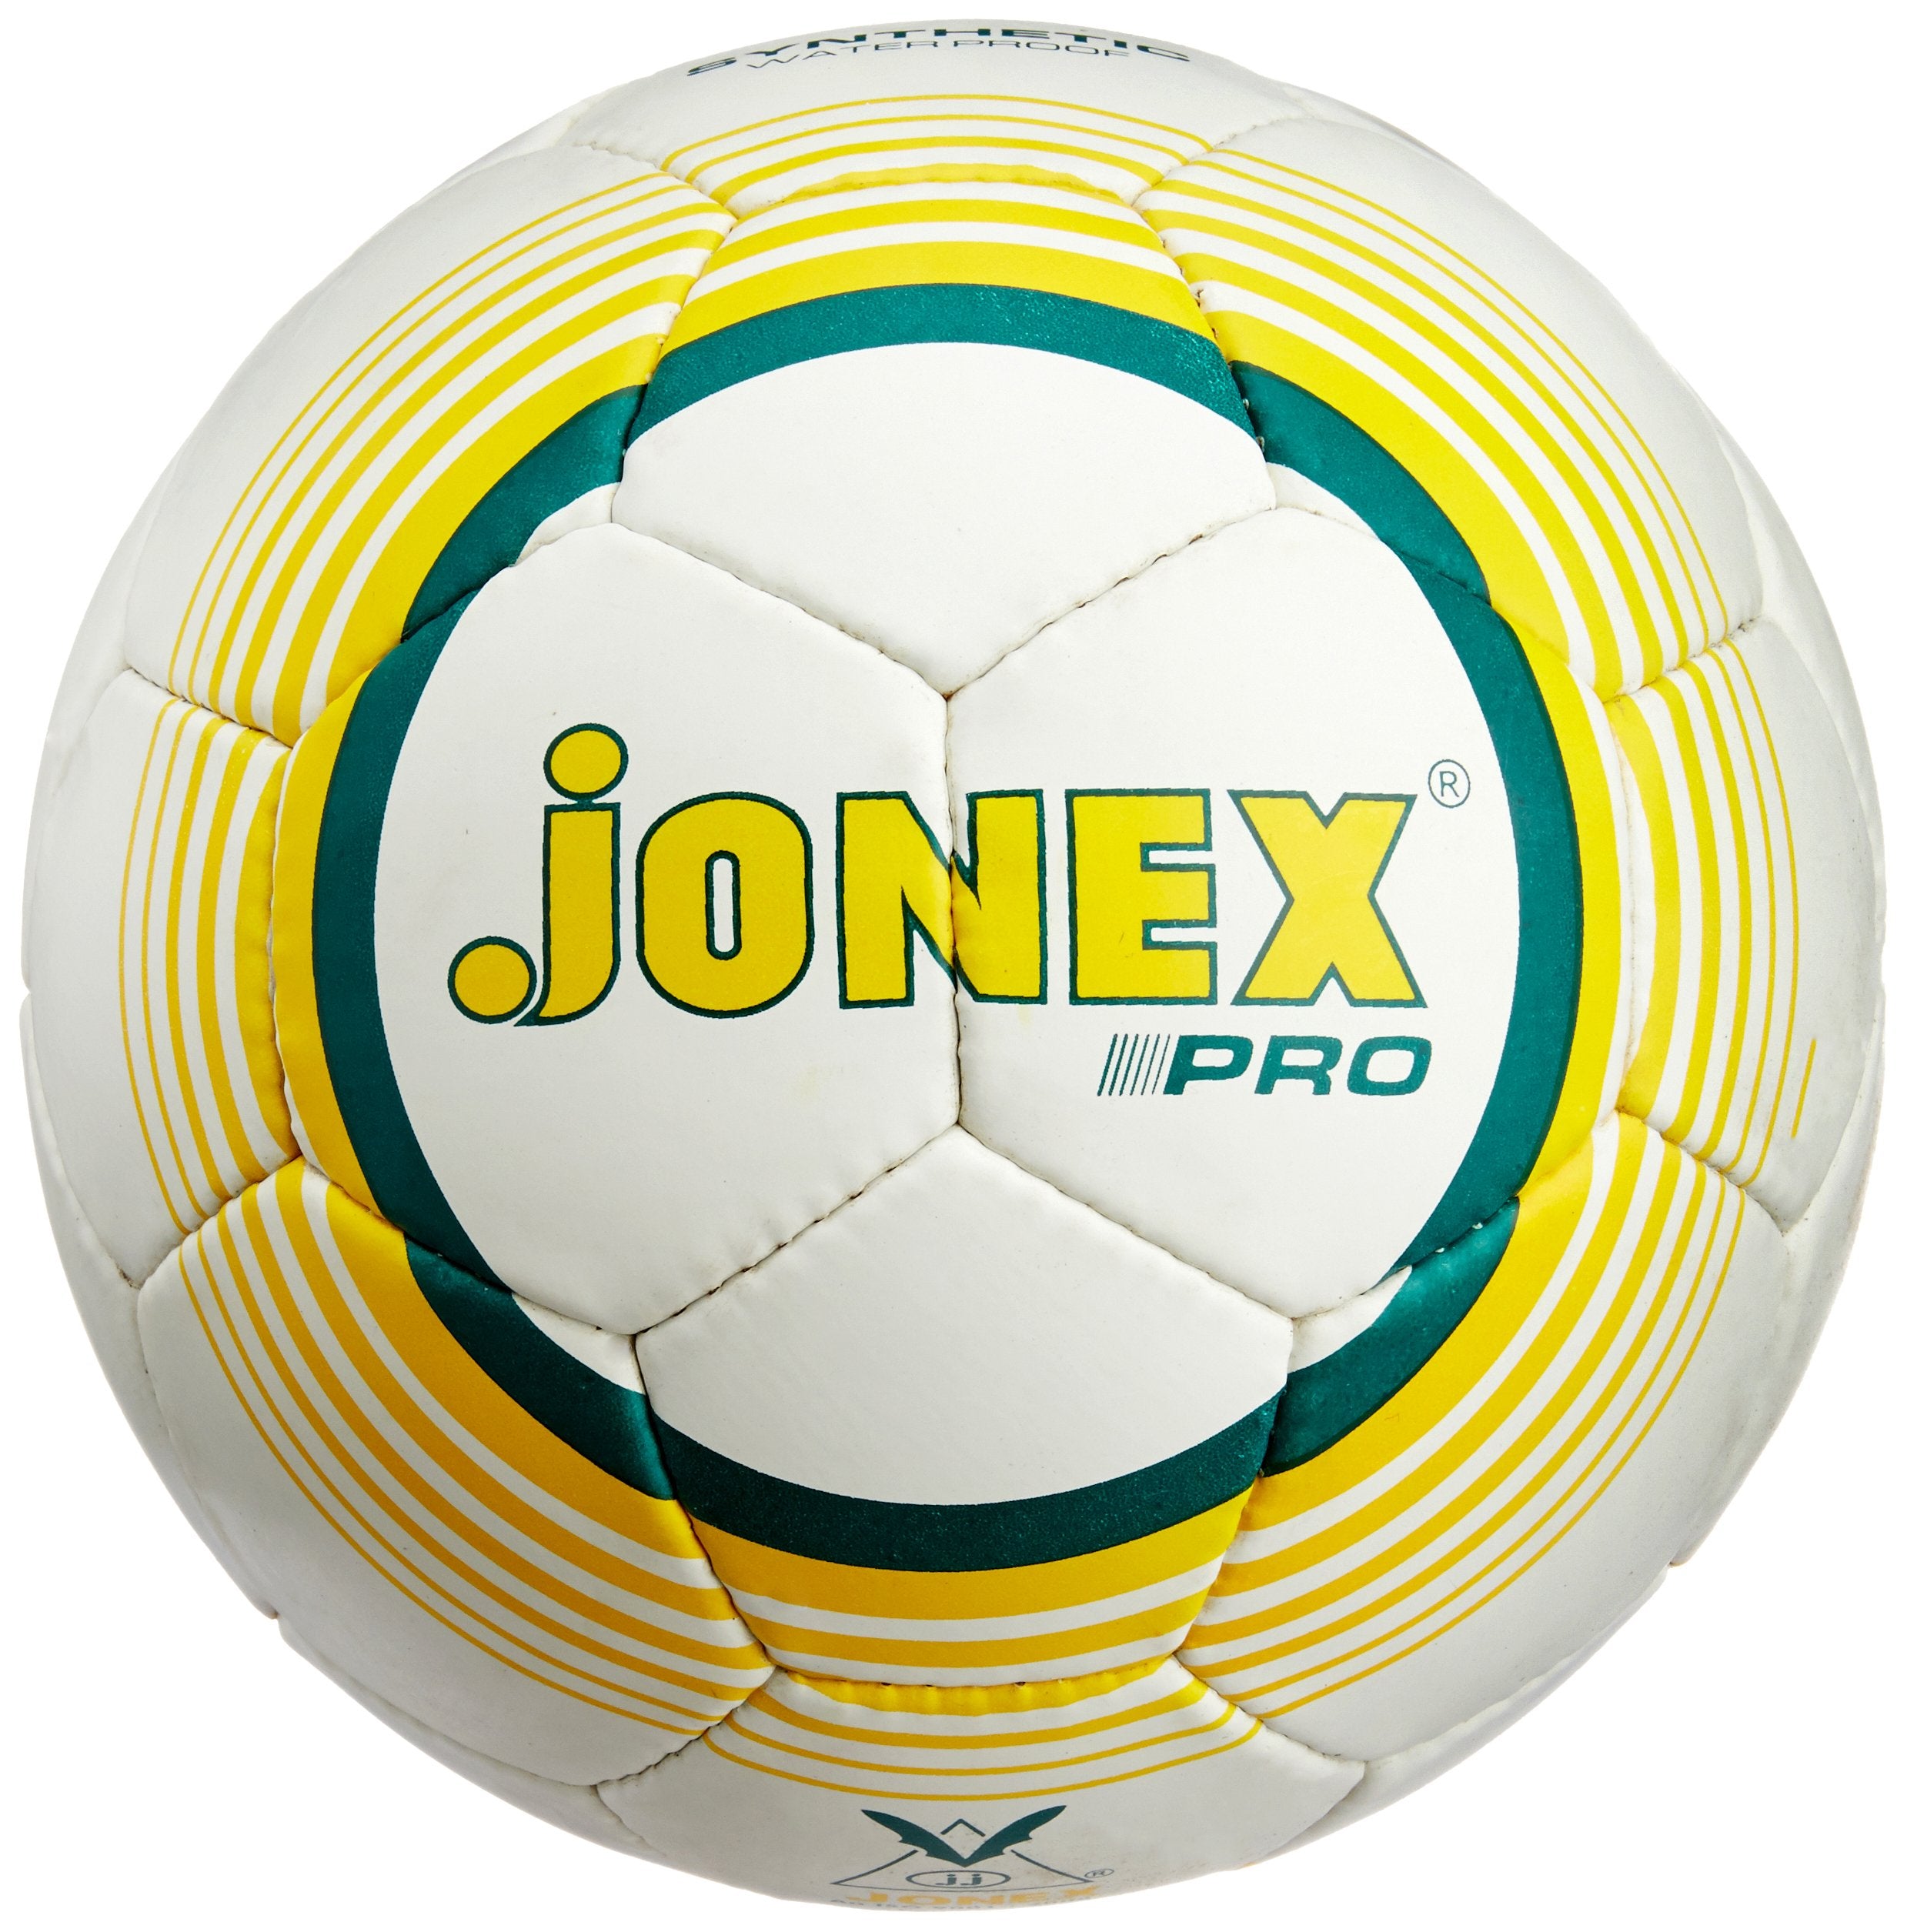 Jonex Pro Football (Yellow/Green/White)